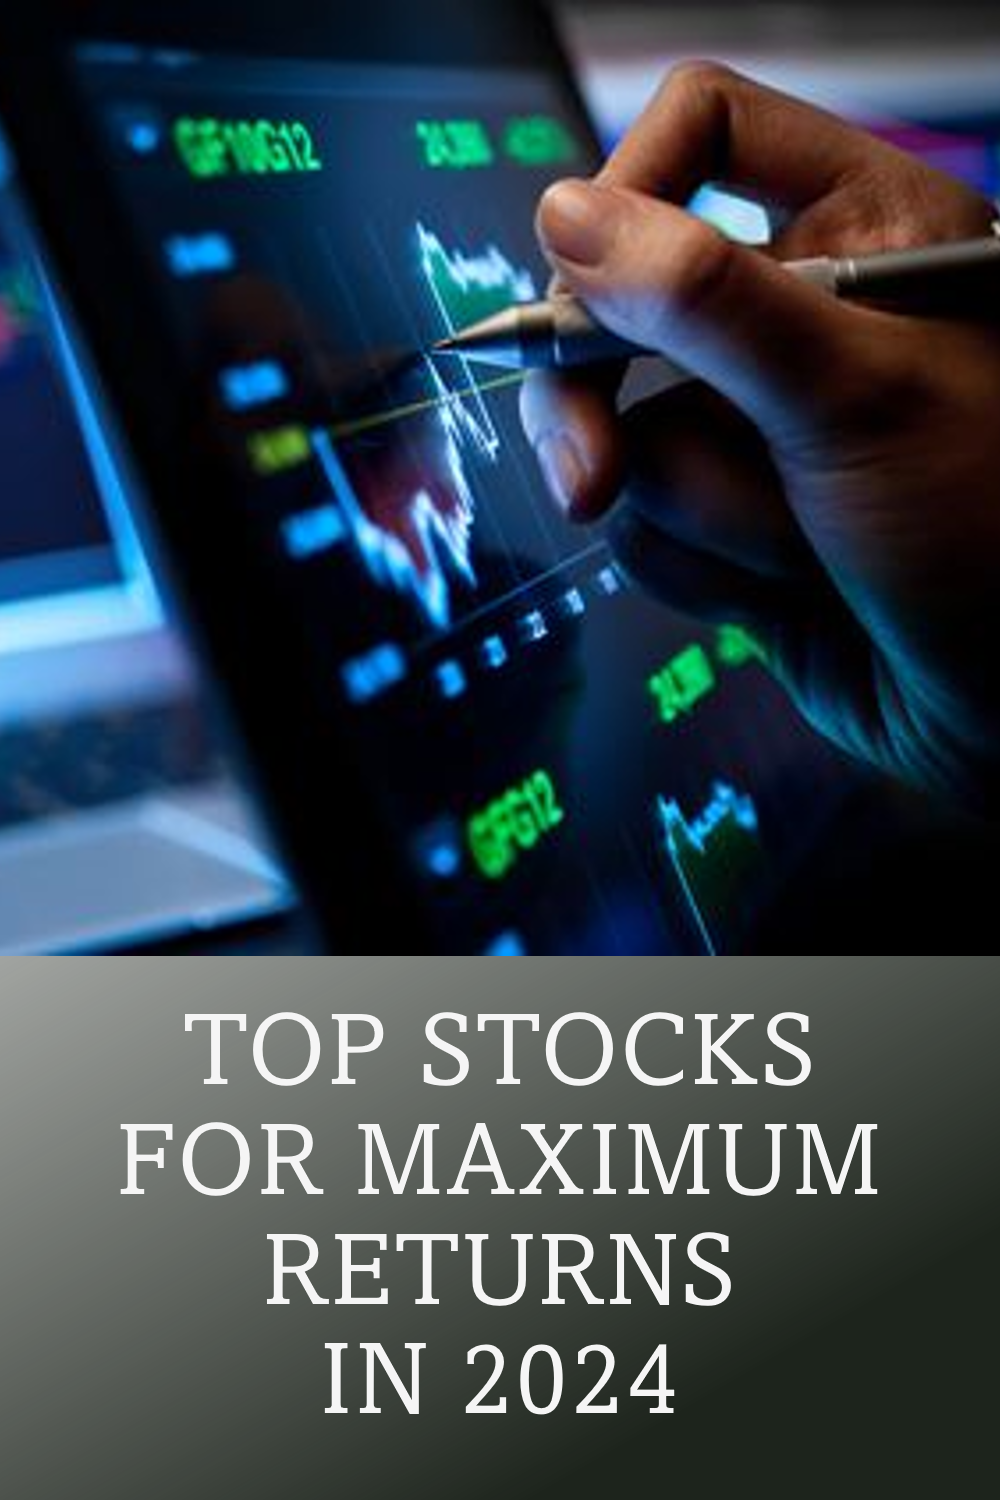 Top stocks to buy in 2024 for maximum returns